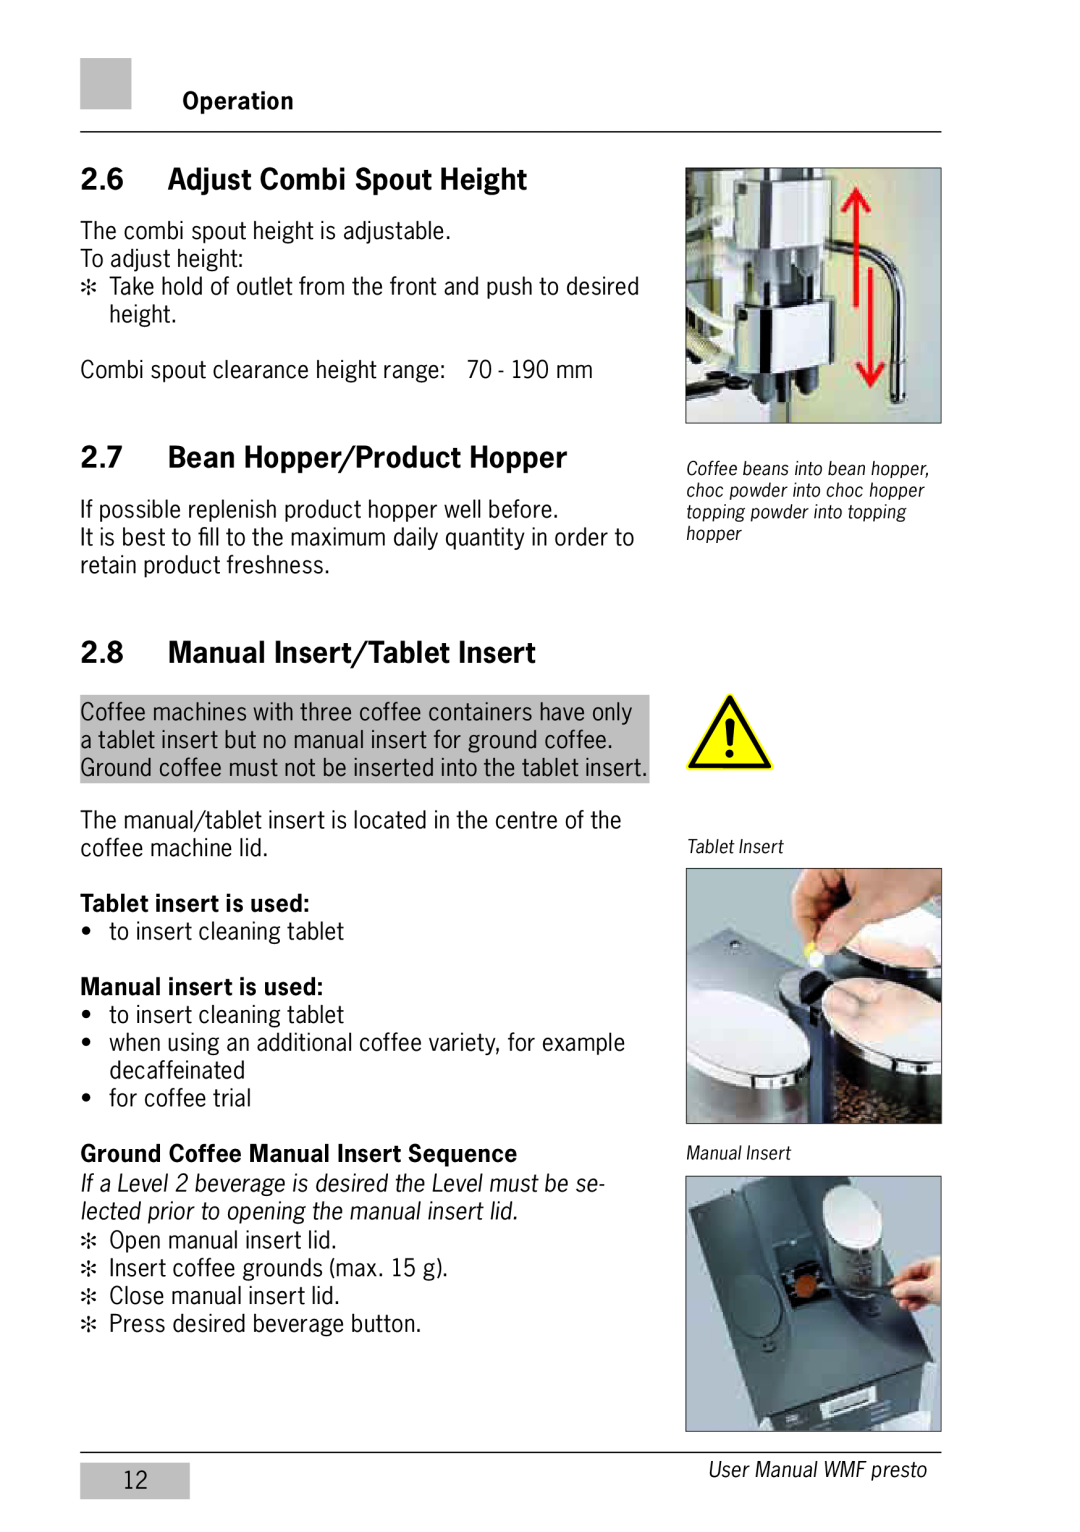 WMF Americas 1400 user manual Adjust Combi Spout Height, Bean Hopper/Product Hopper, Manual Insert/Tablet Insert, Operation 